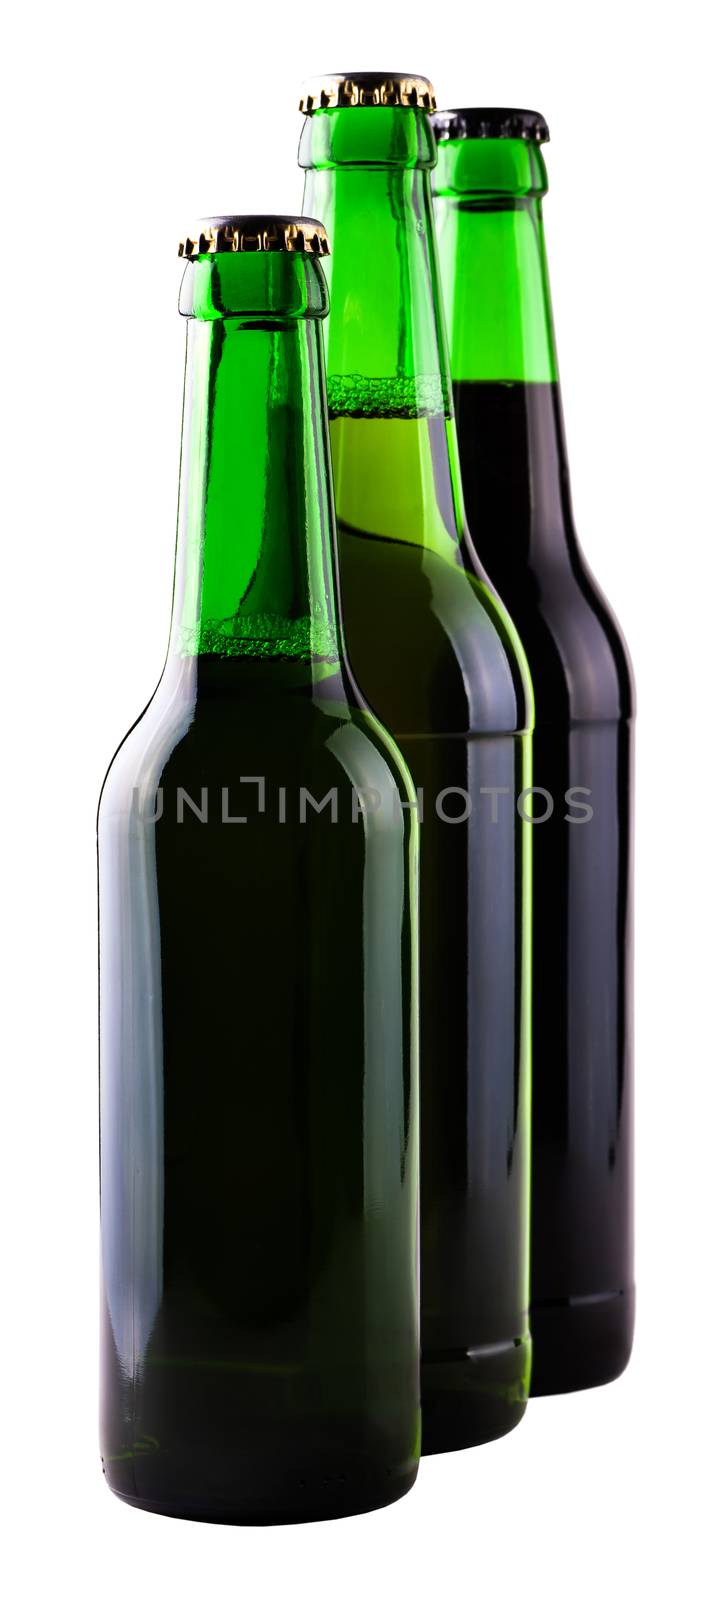 beer in glass bottles of different varieties  by MegaArt